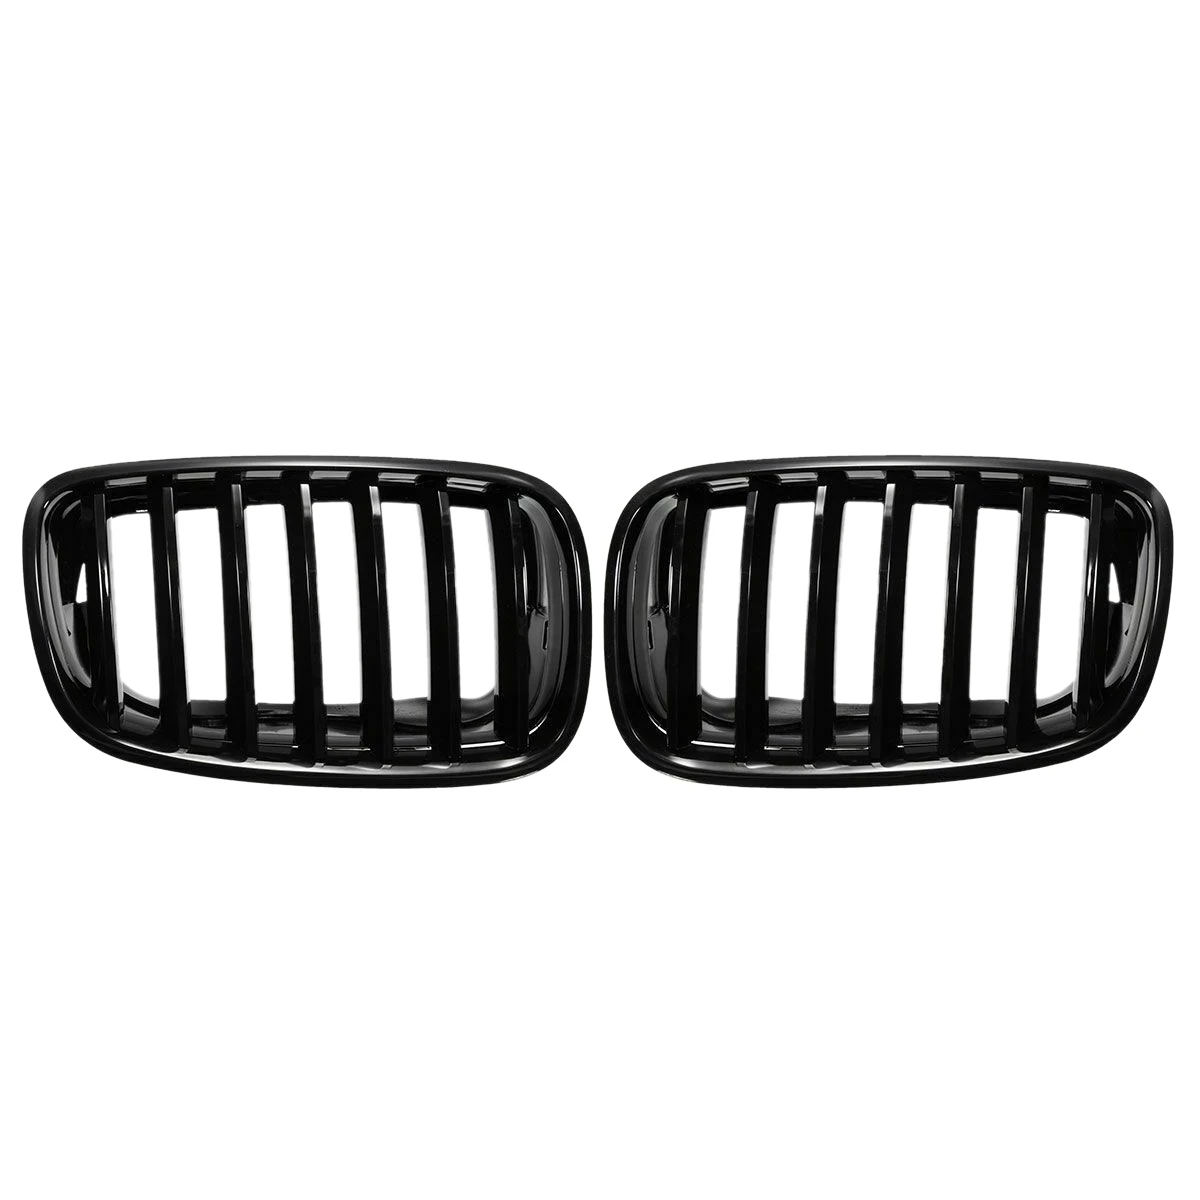 

1 пара глянцевая черная передняя решетка радиатора для BMW X5 X6 E70 E71 2007-2013 51137157687 51137157688